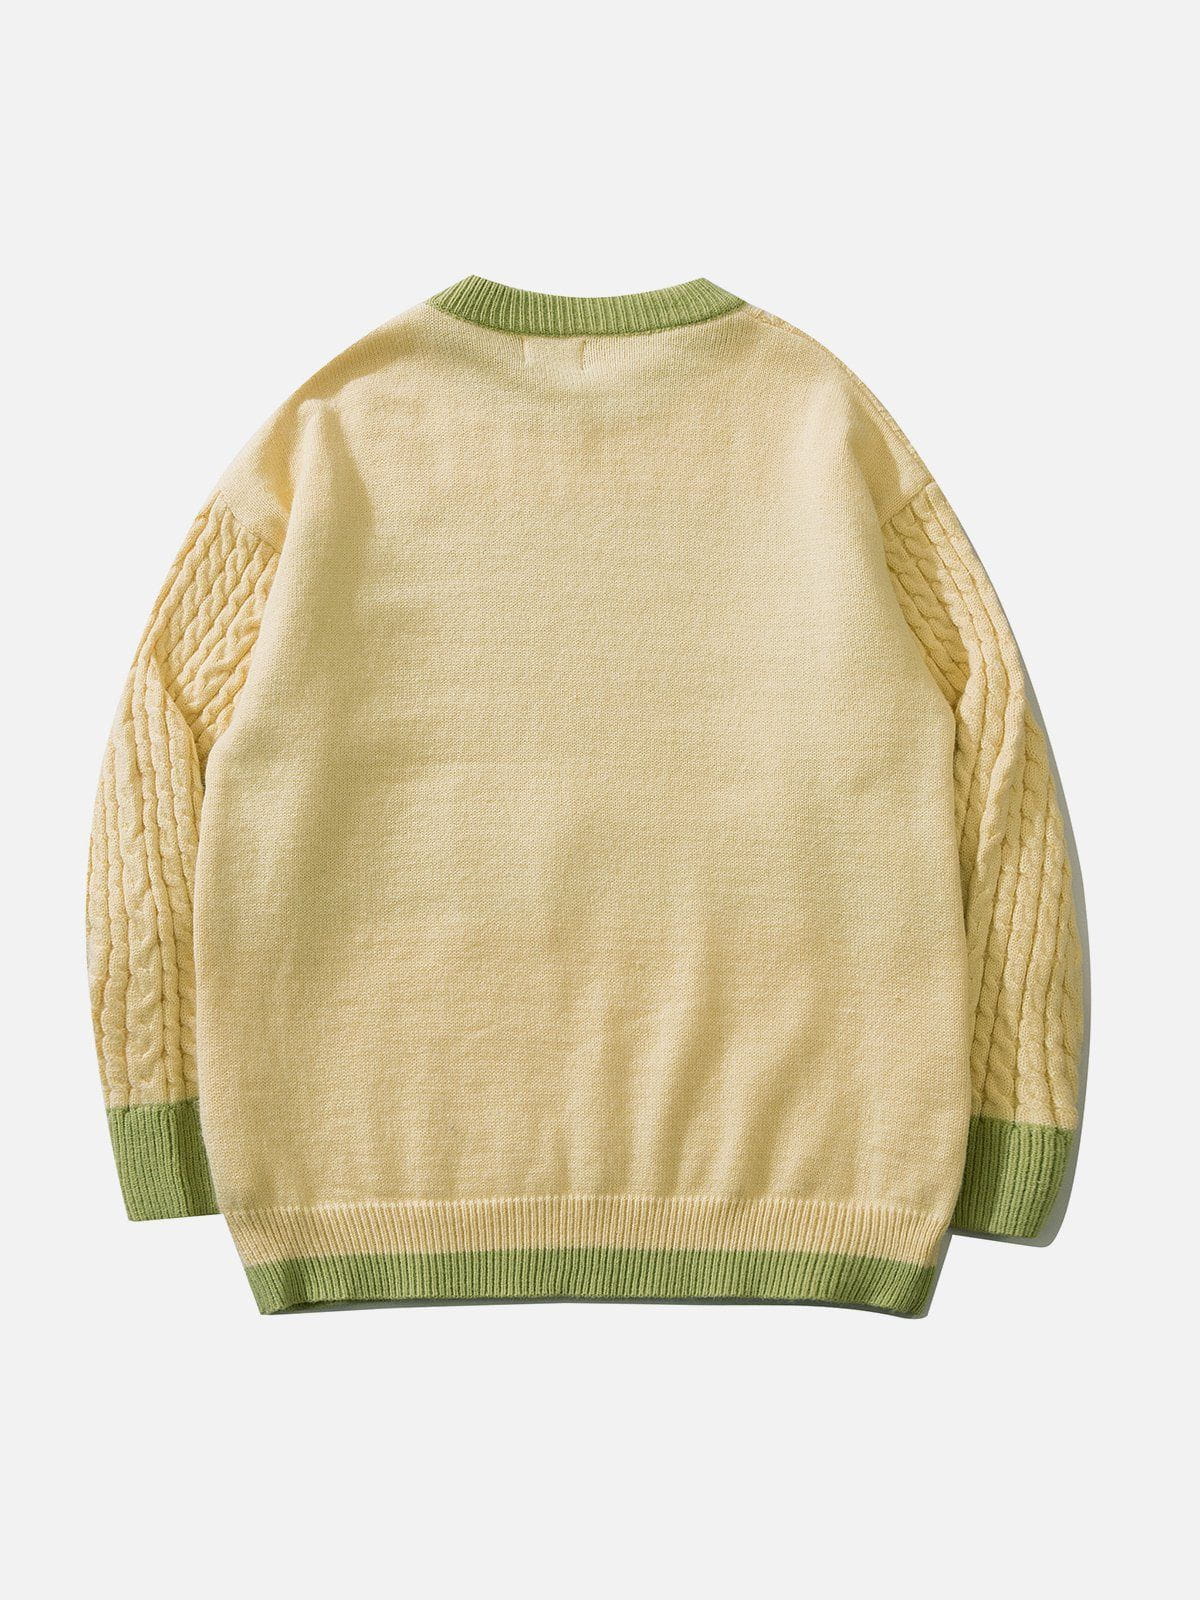 Majesda® - Stitching Color Rabbit Sweater outfit ideas streetwear fashion